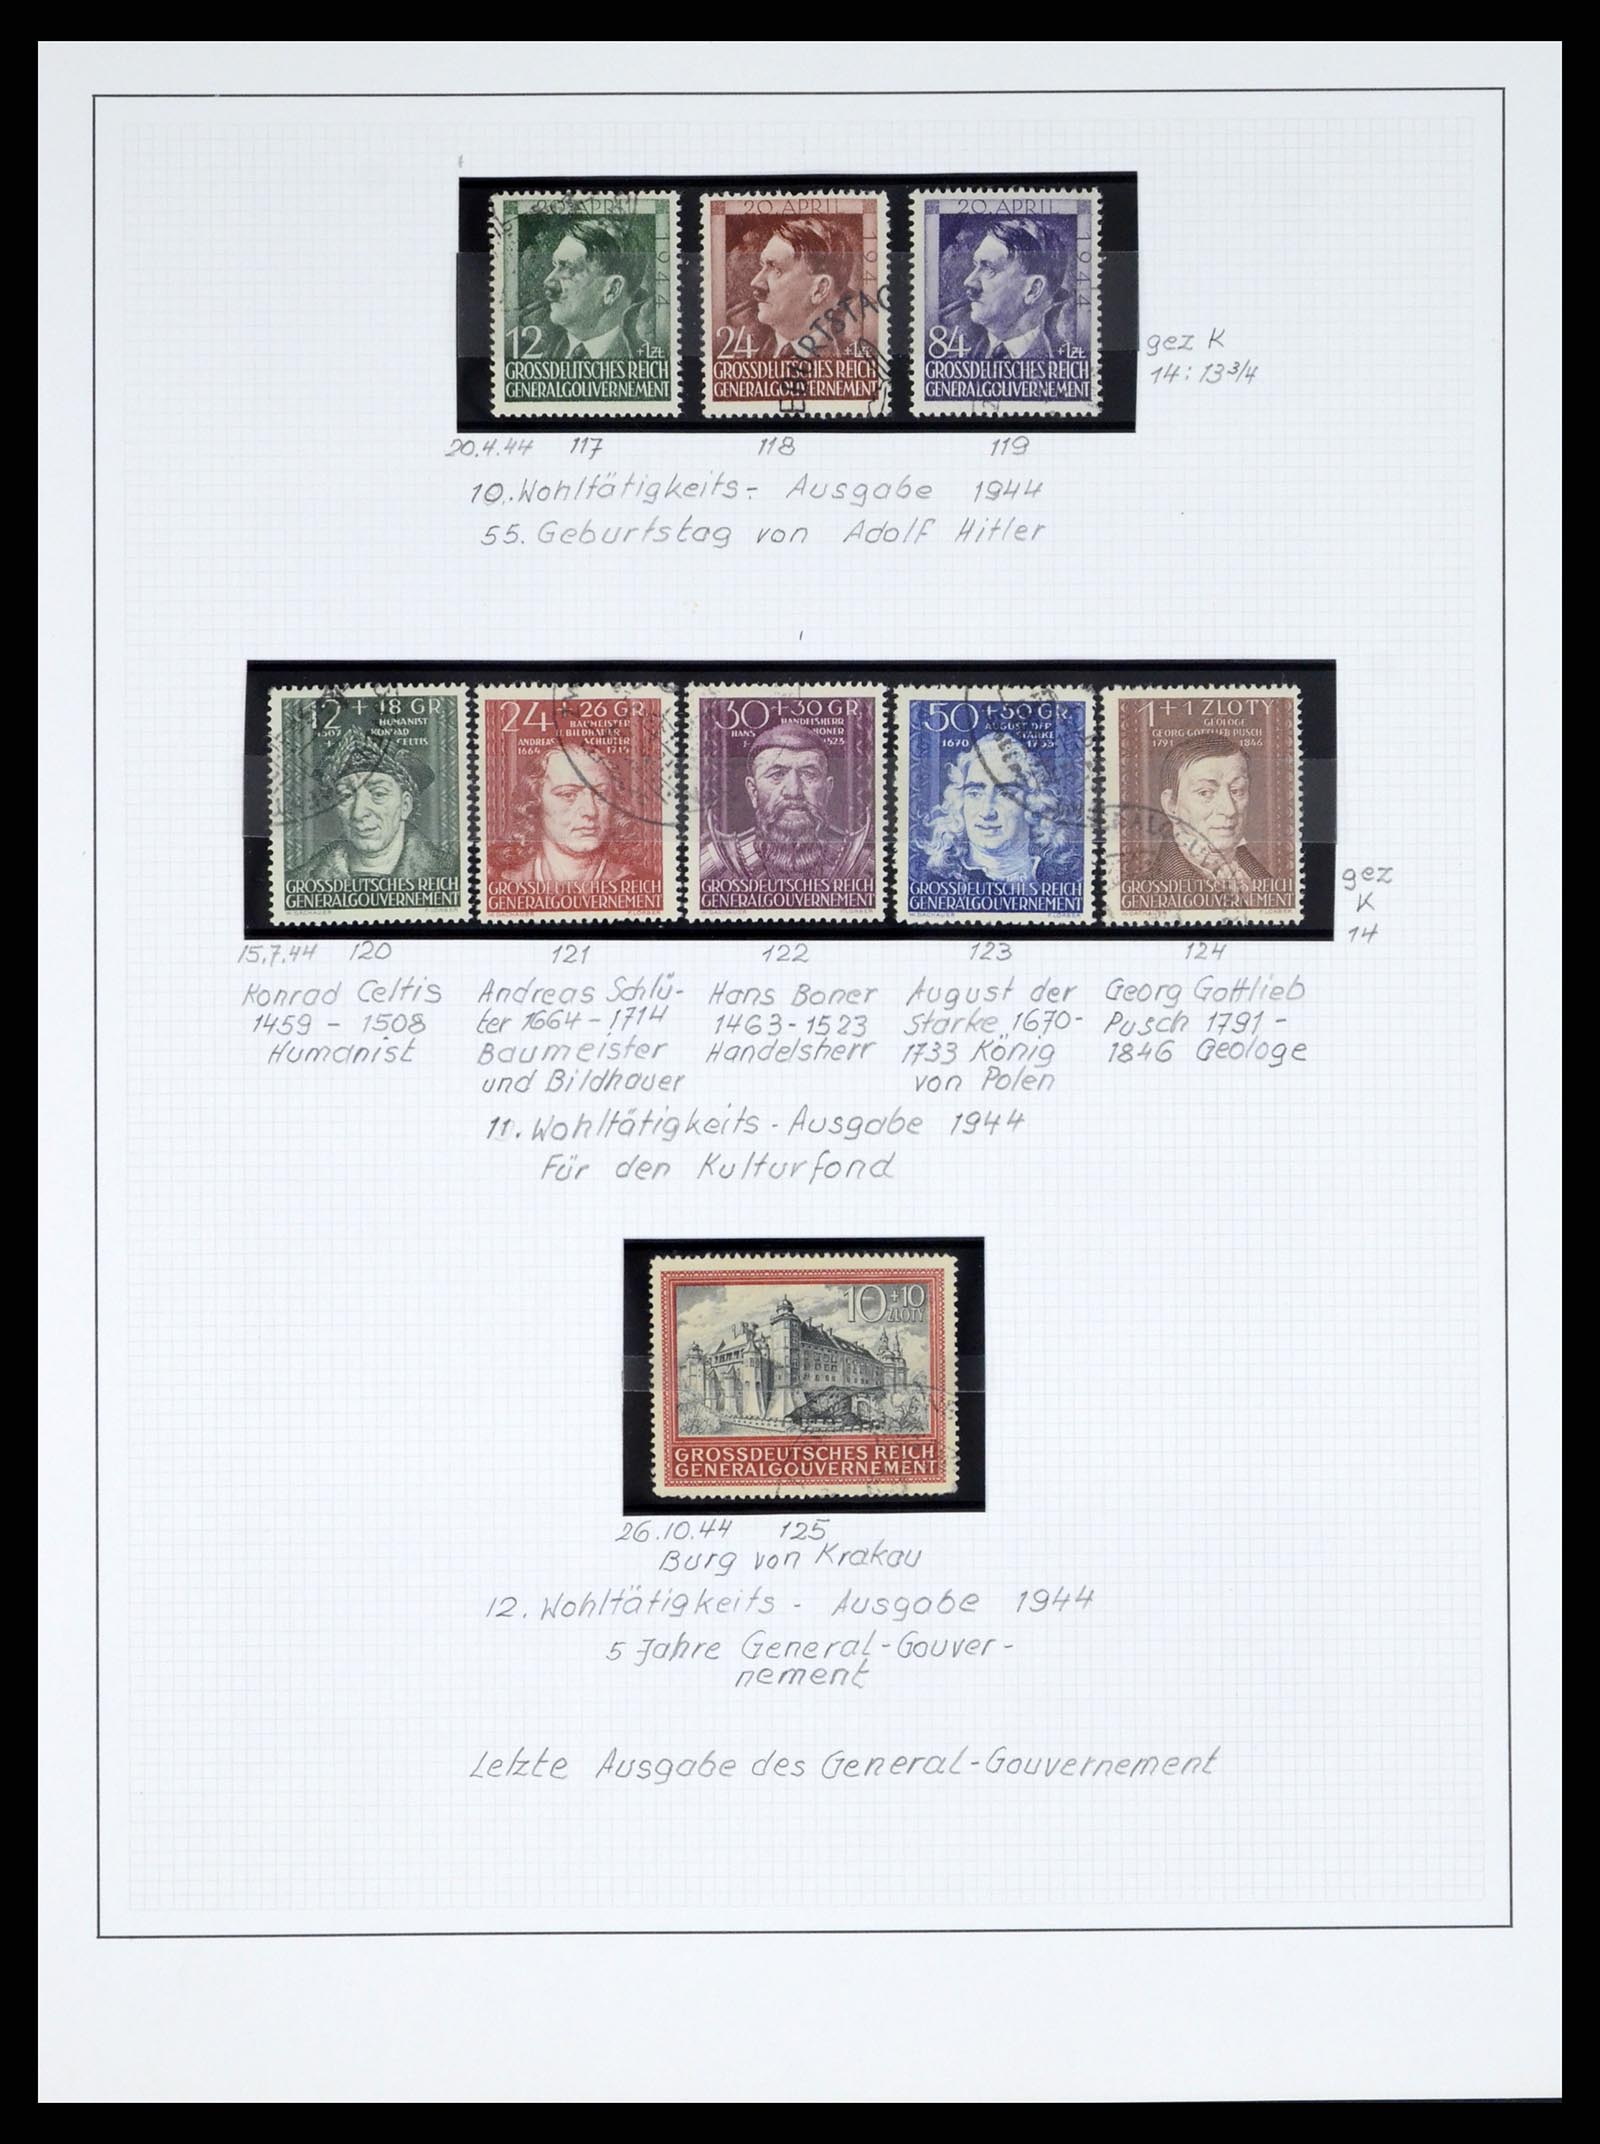 37535 175 - Stamp collection 37535 German occupation second worldwar 1939-1945.